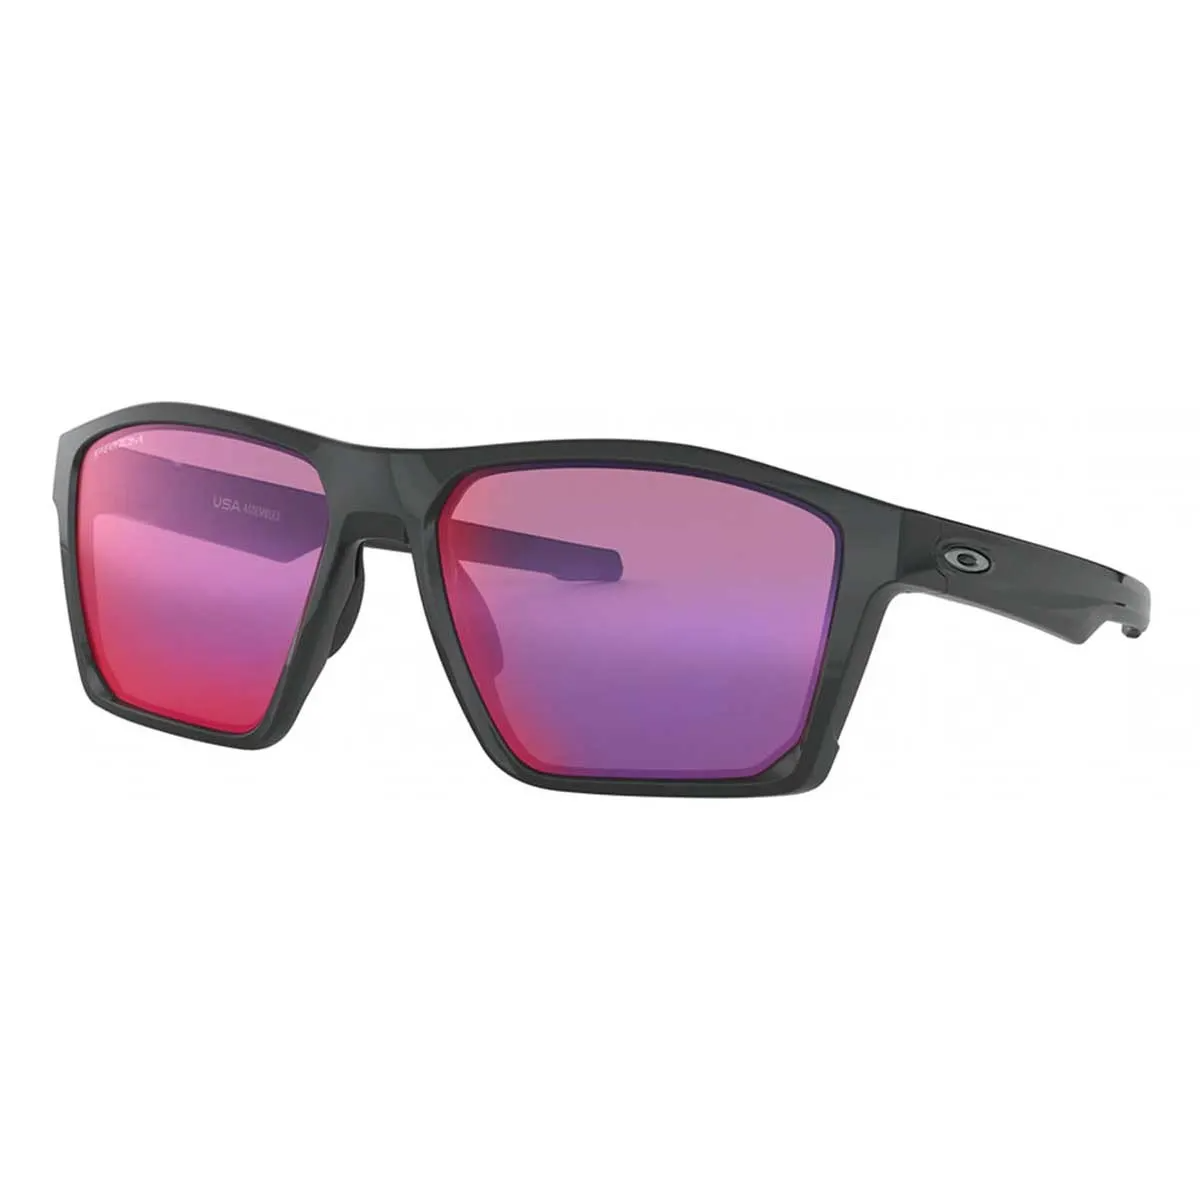 Purple Oakley polarized sunglasses